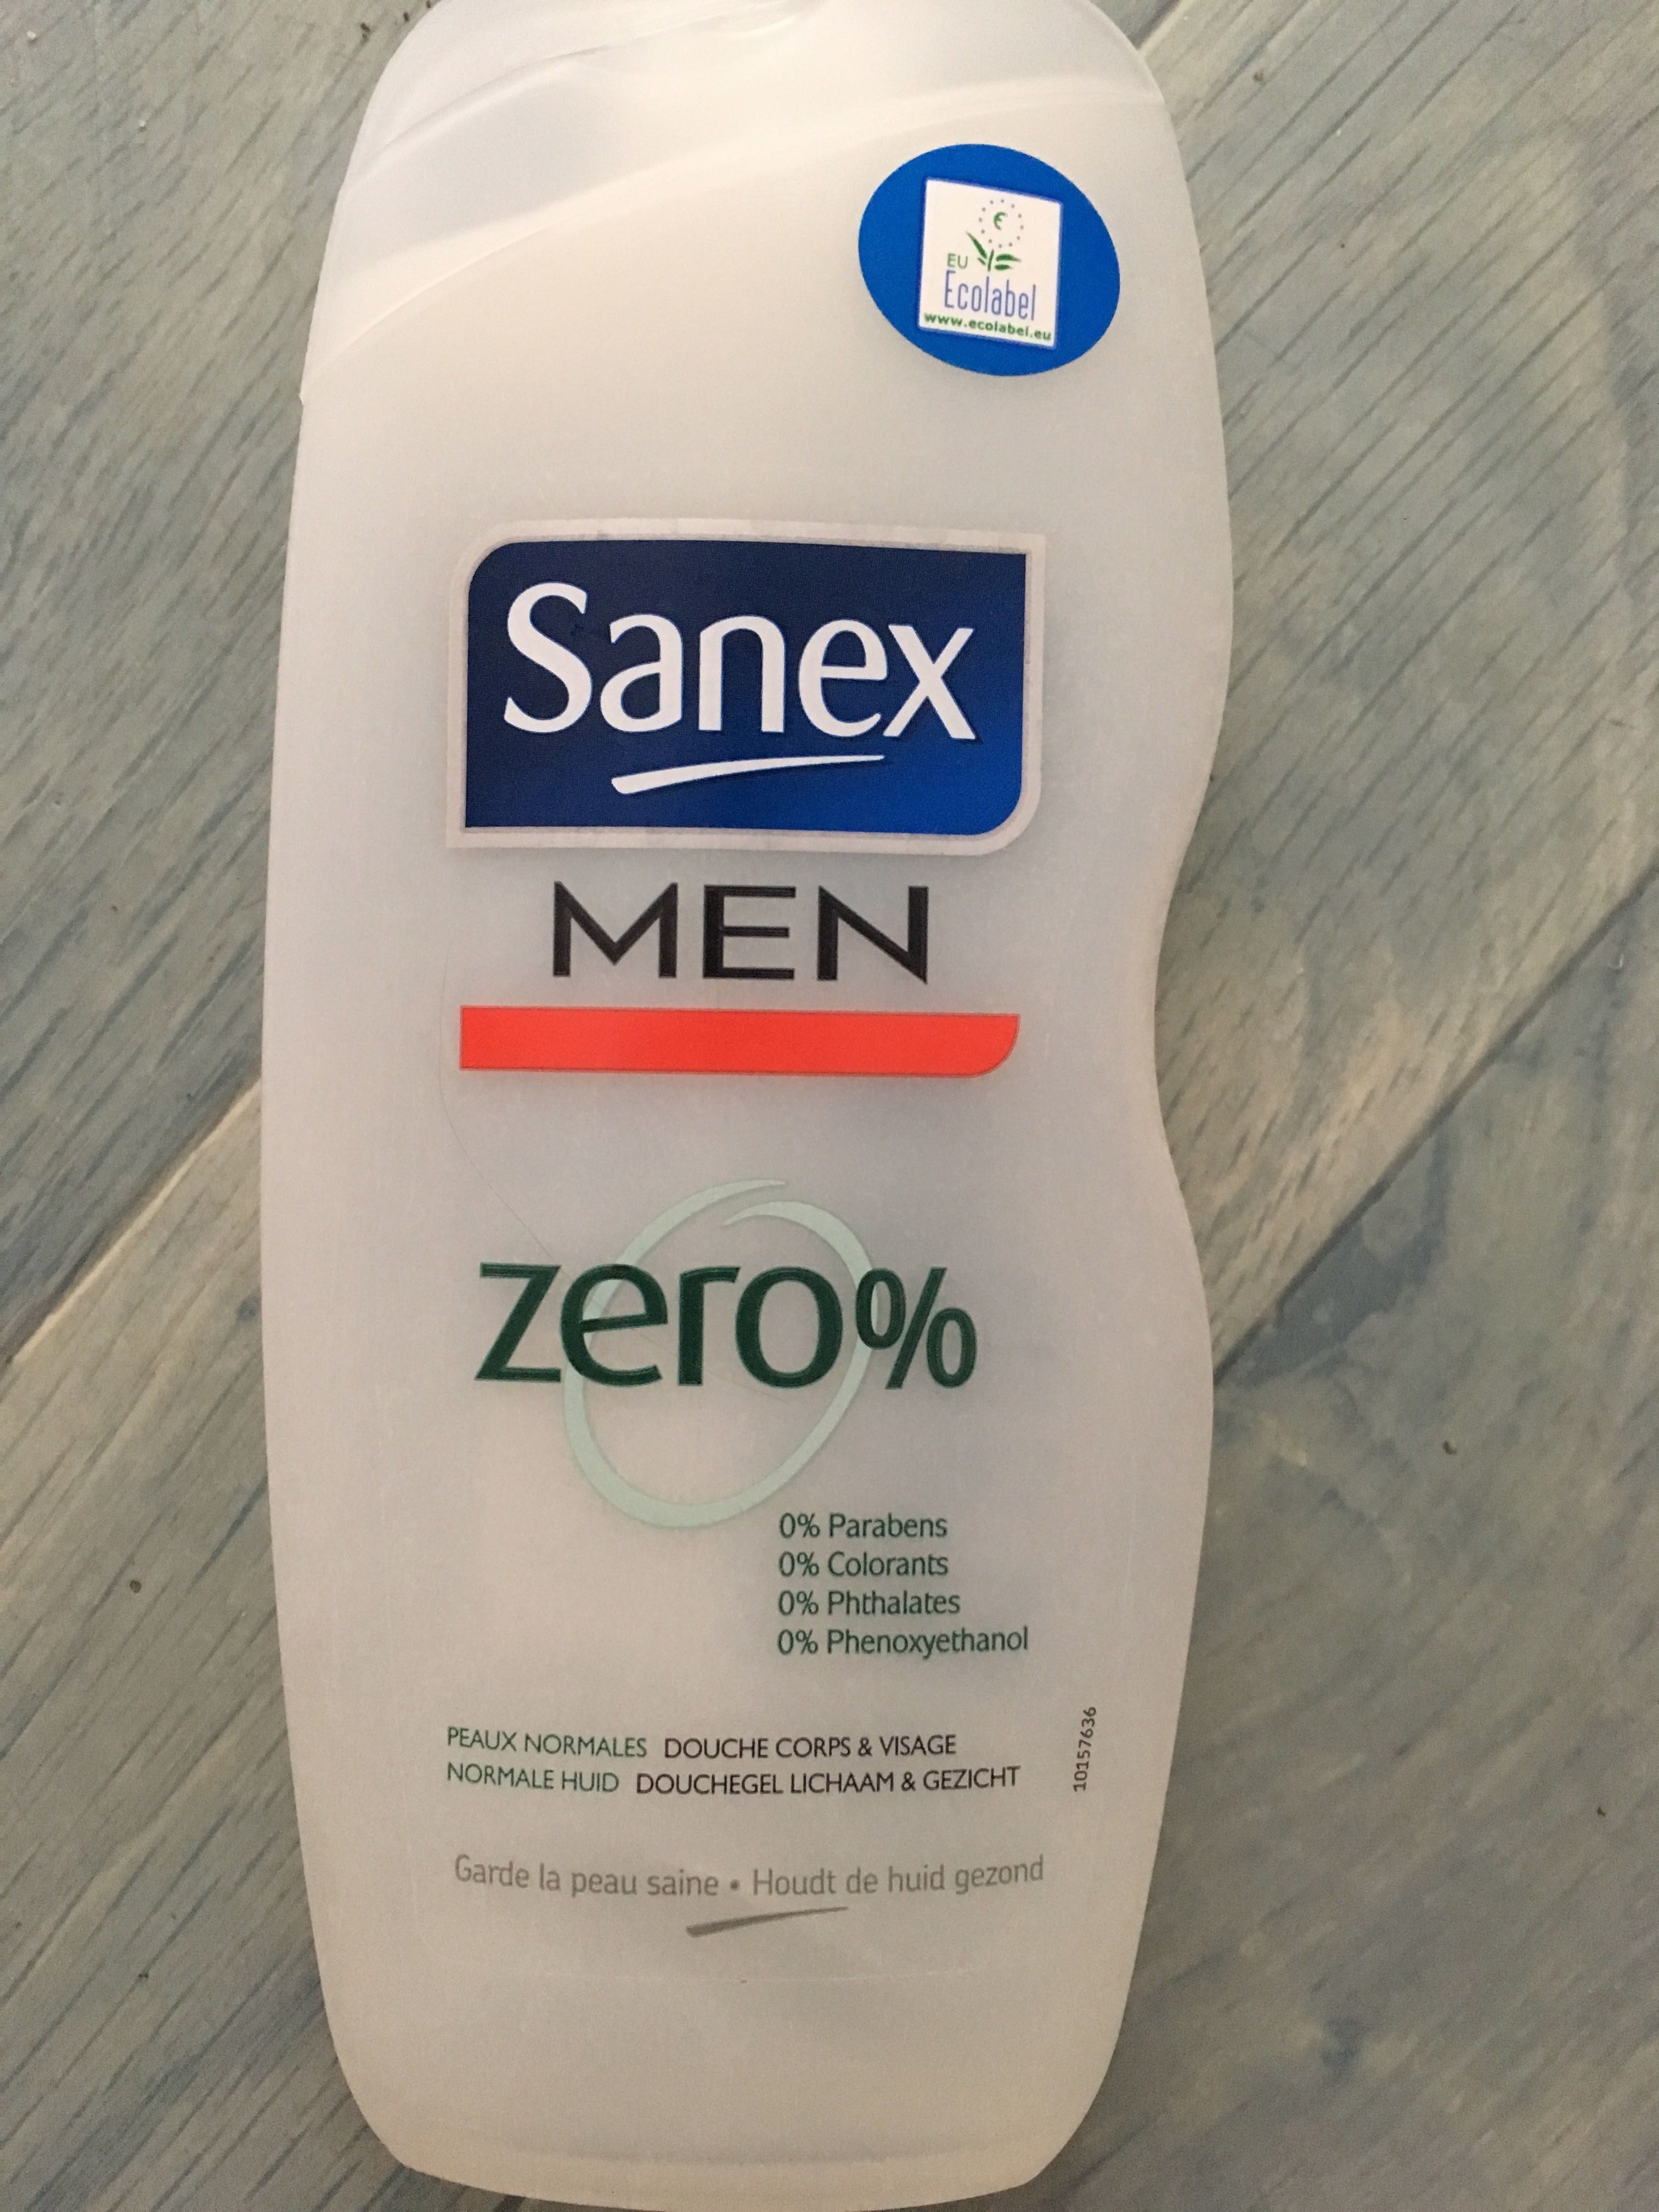 Sanex Men Zéro % - Produit - fr